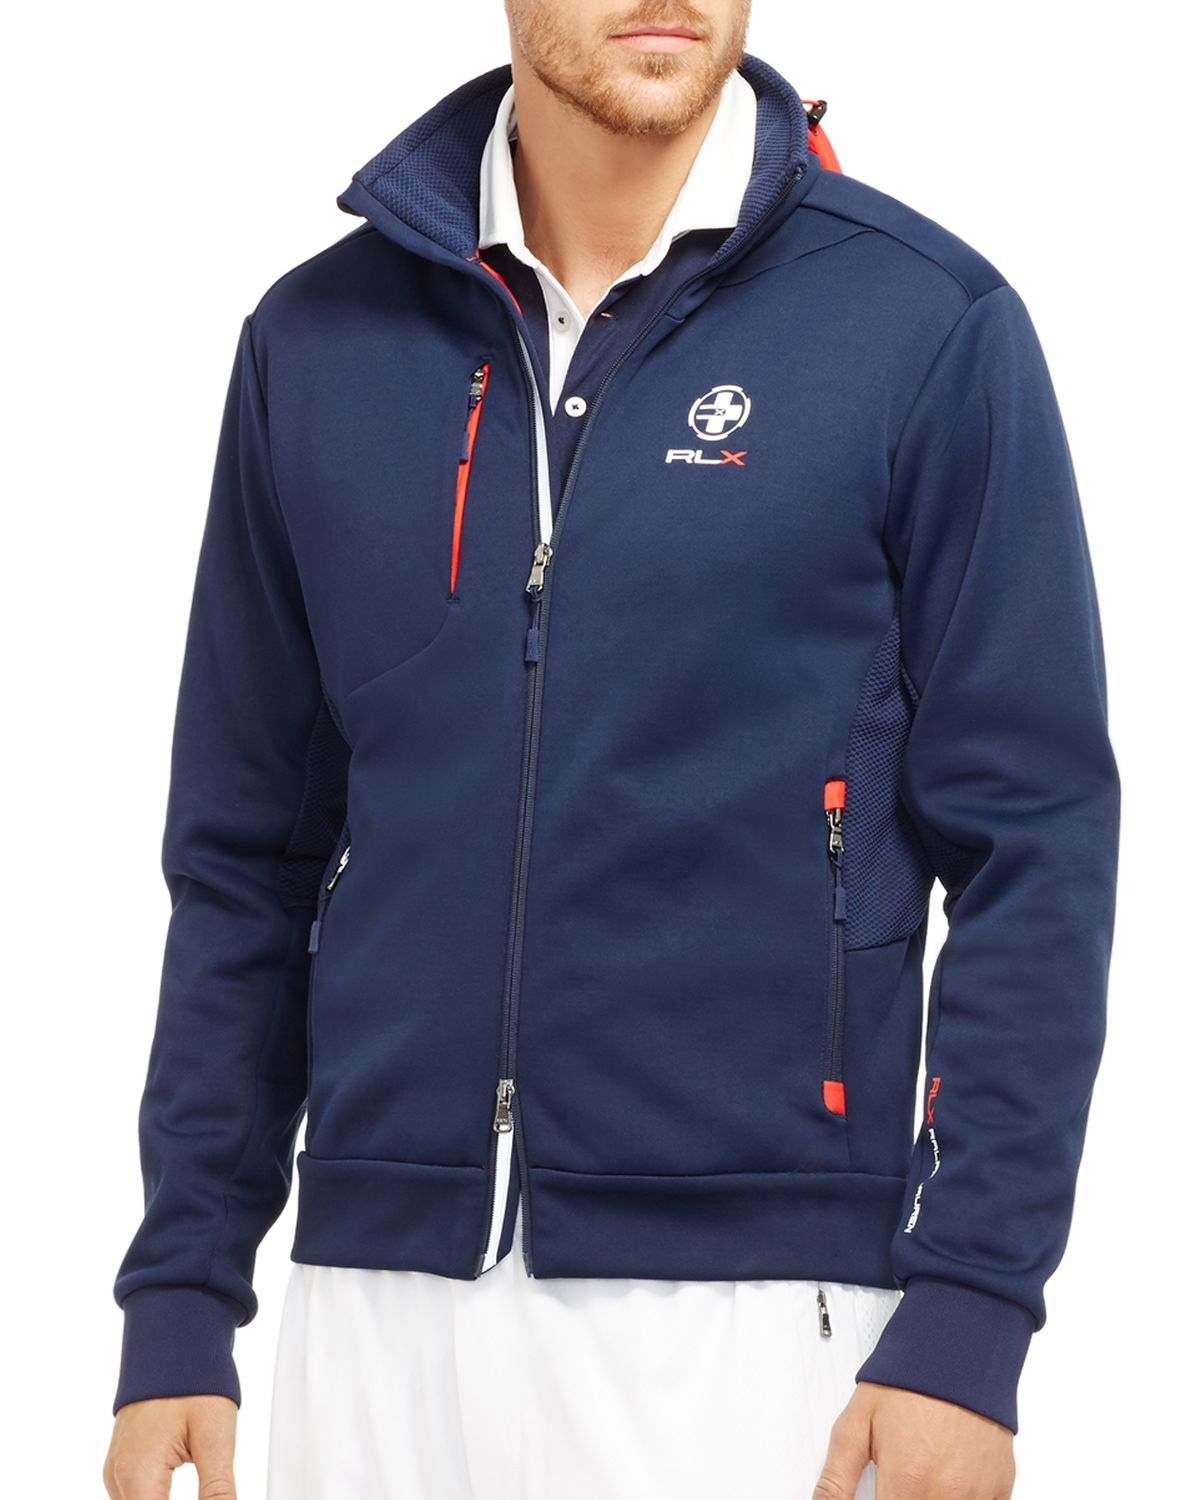 Buy > rlx polo sport jacket > in stock